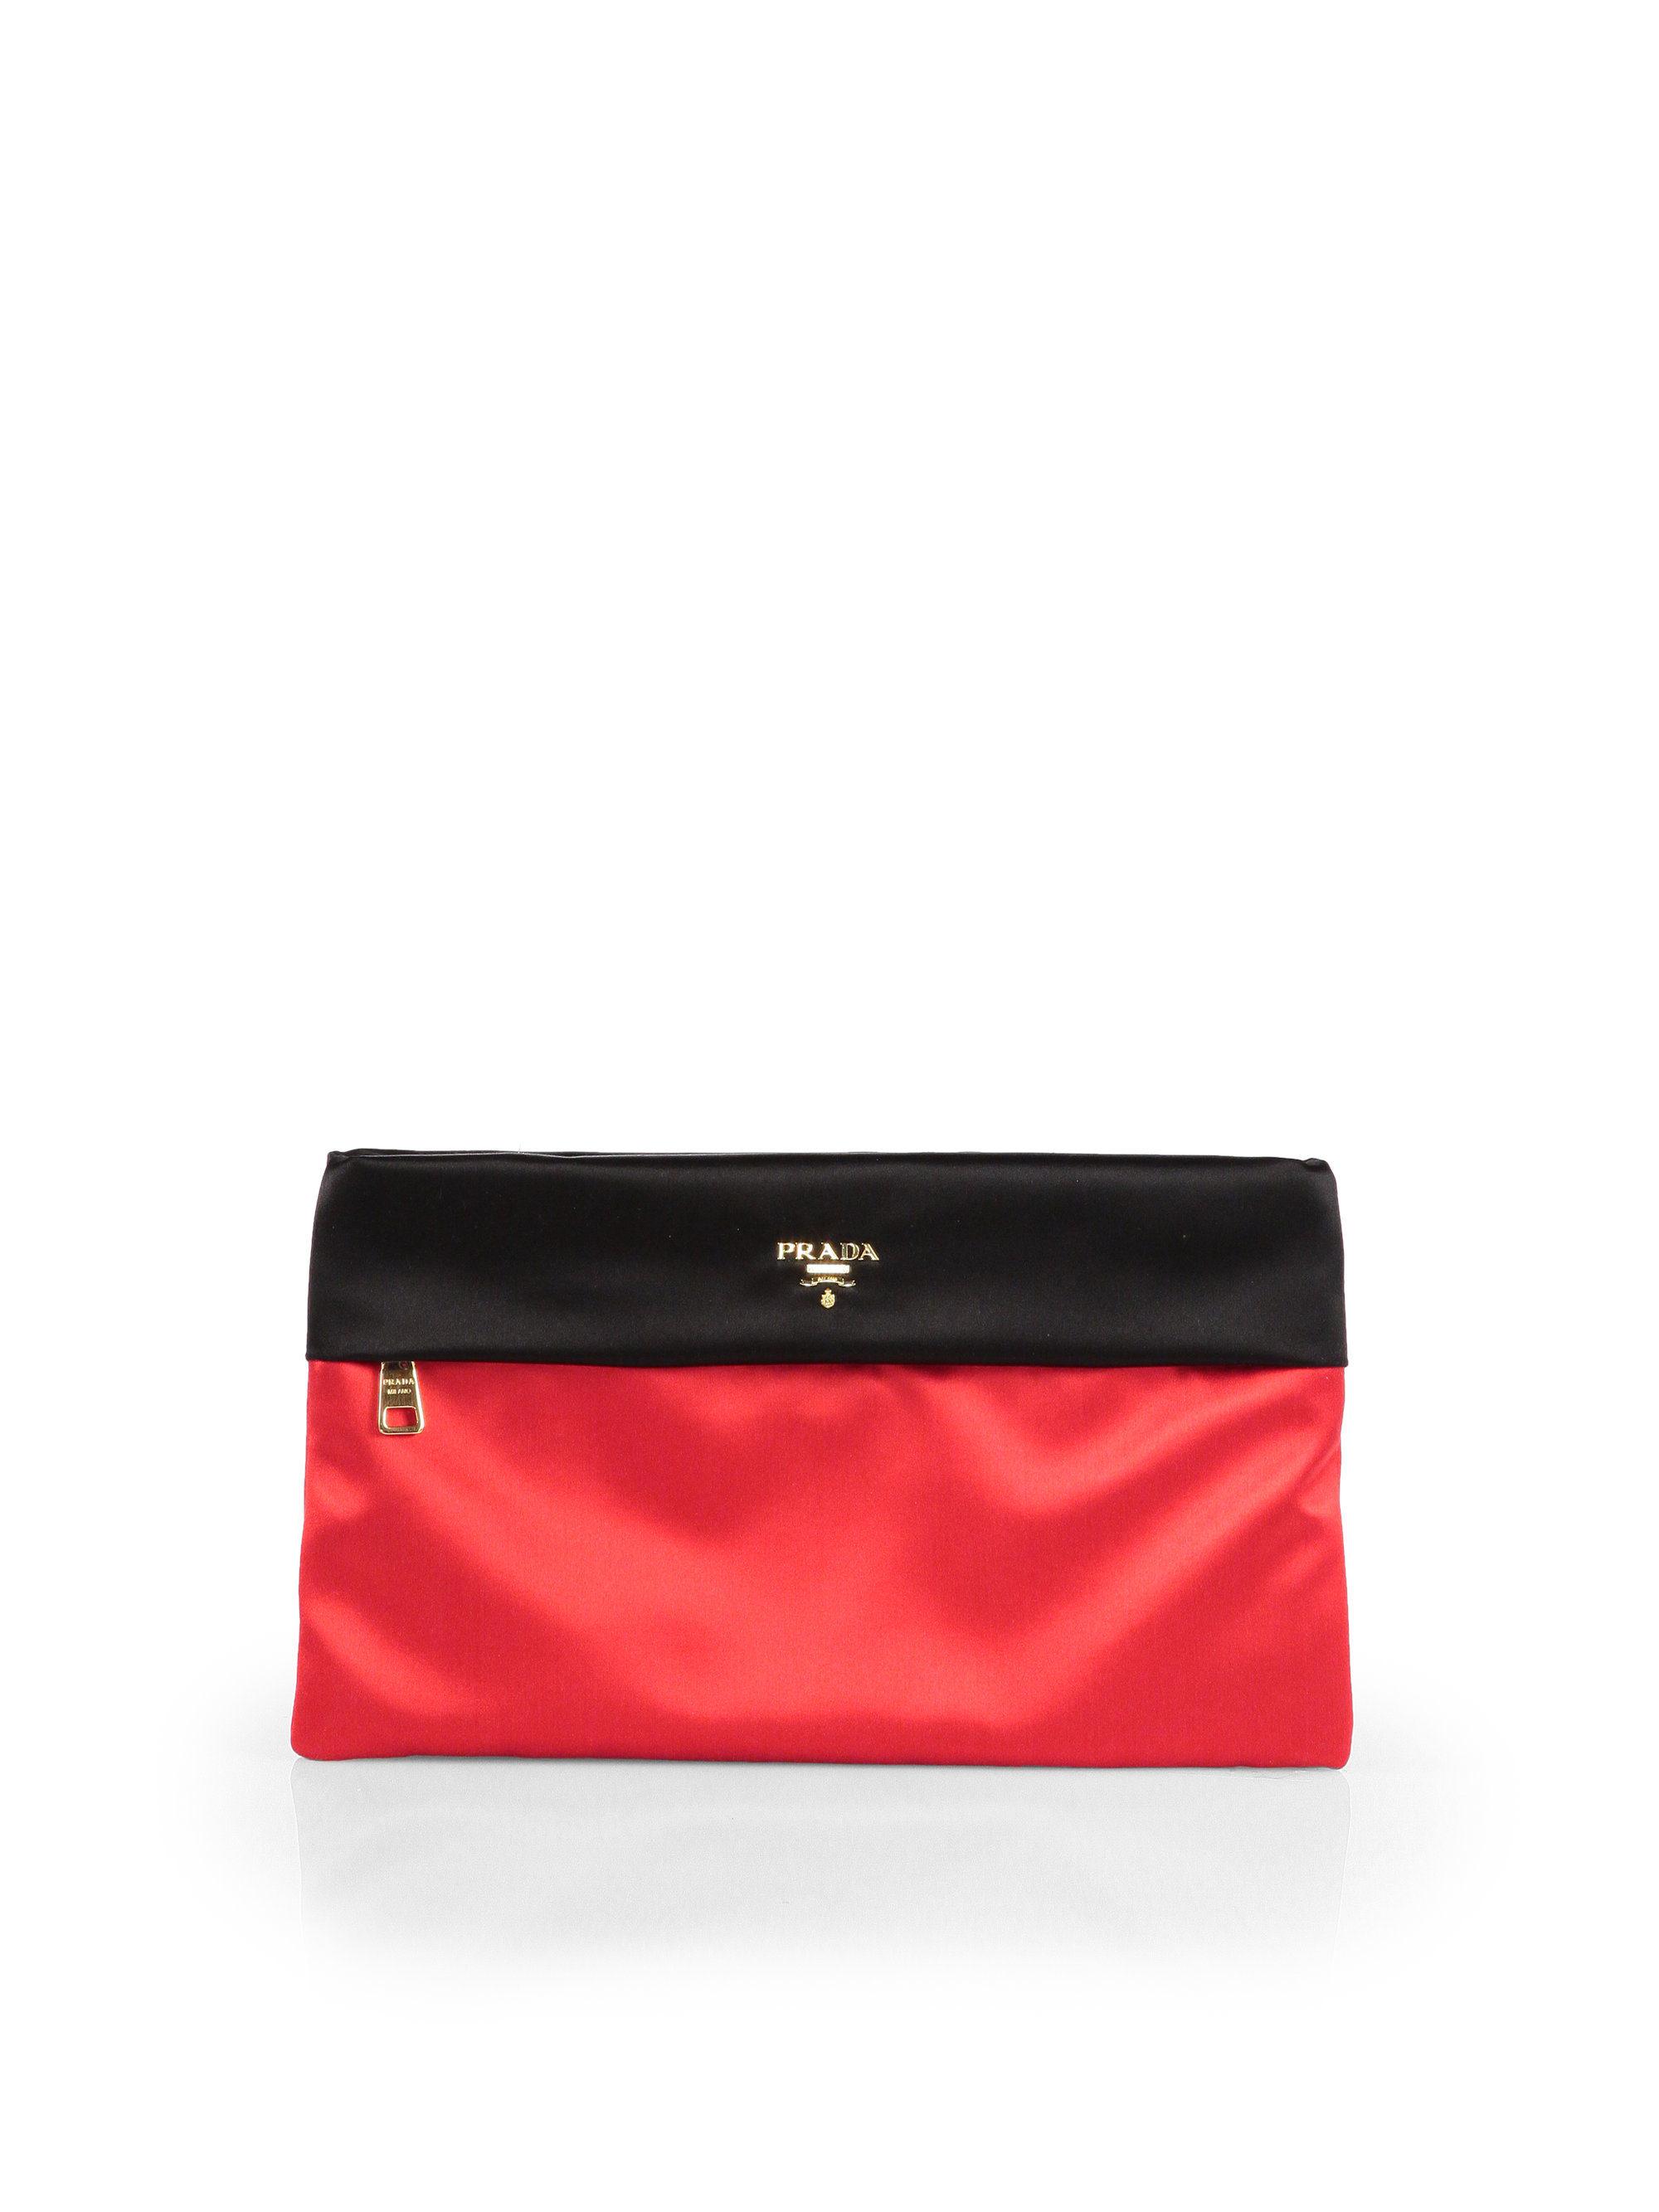 prada satchel saffiano - Prada Raso Bicolor Satin Box Clutch in Red (RED BLACK) | Lyst